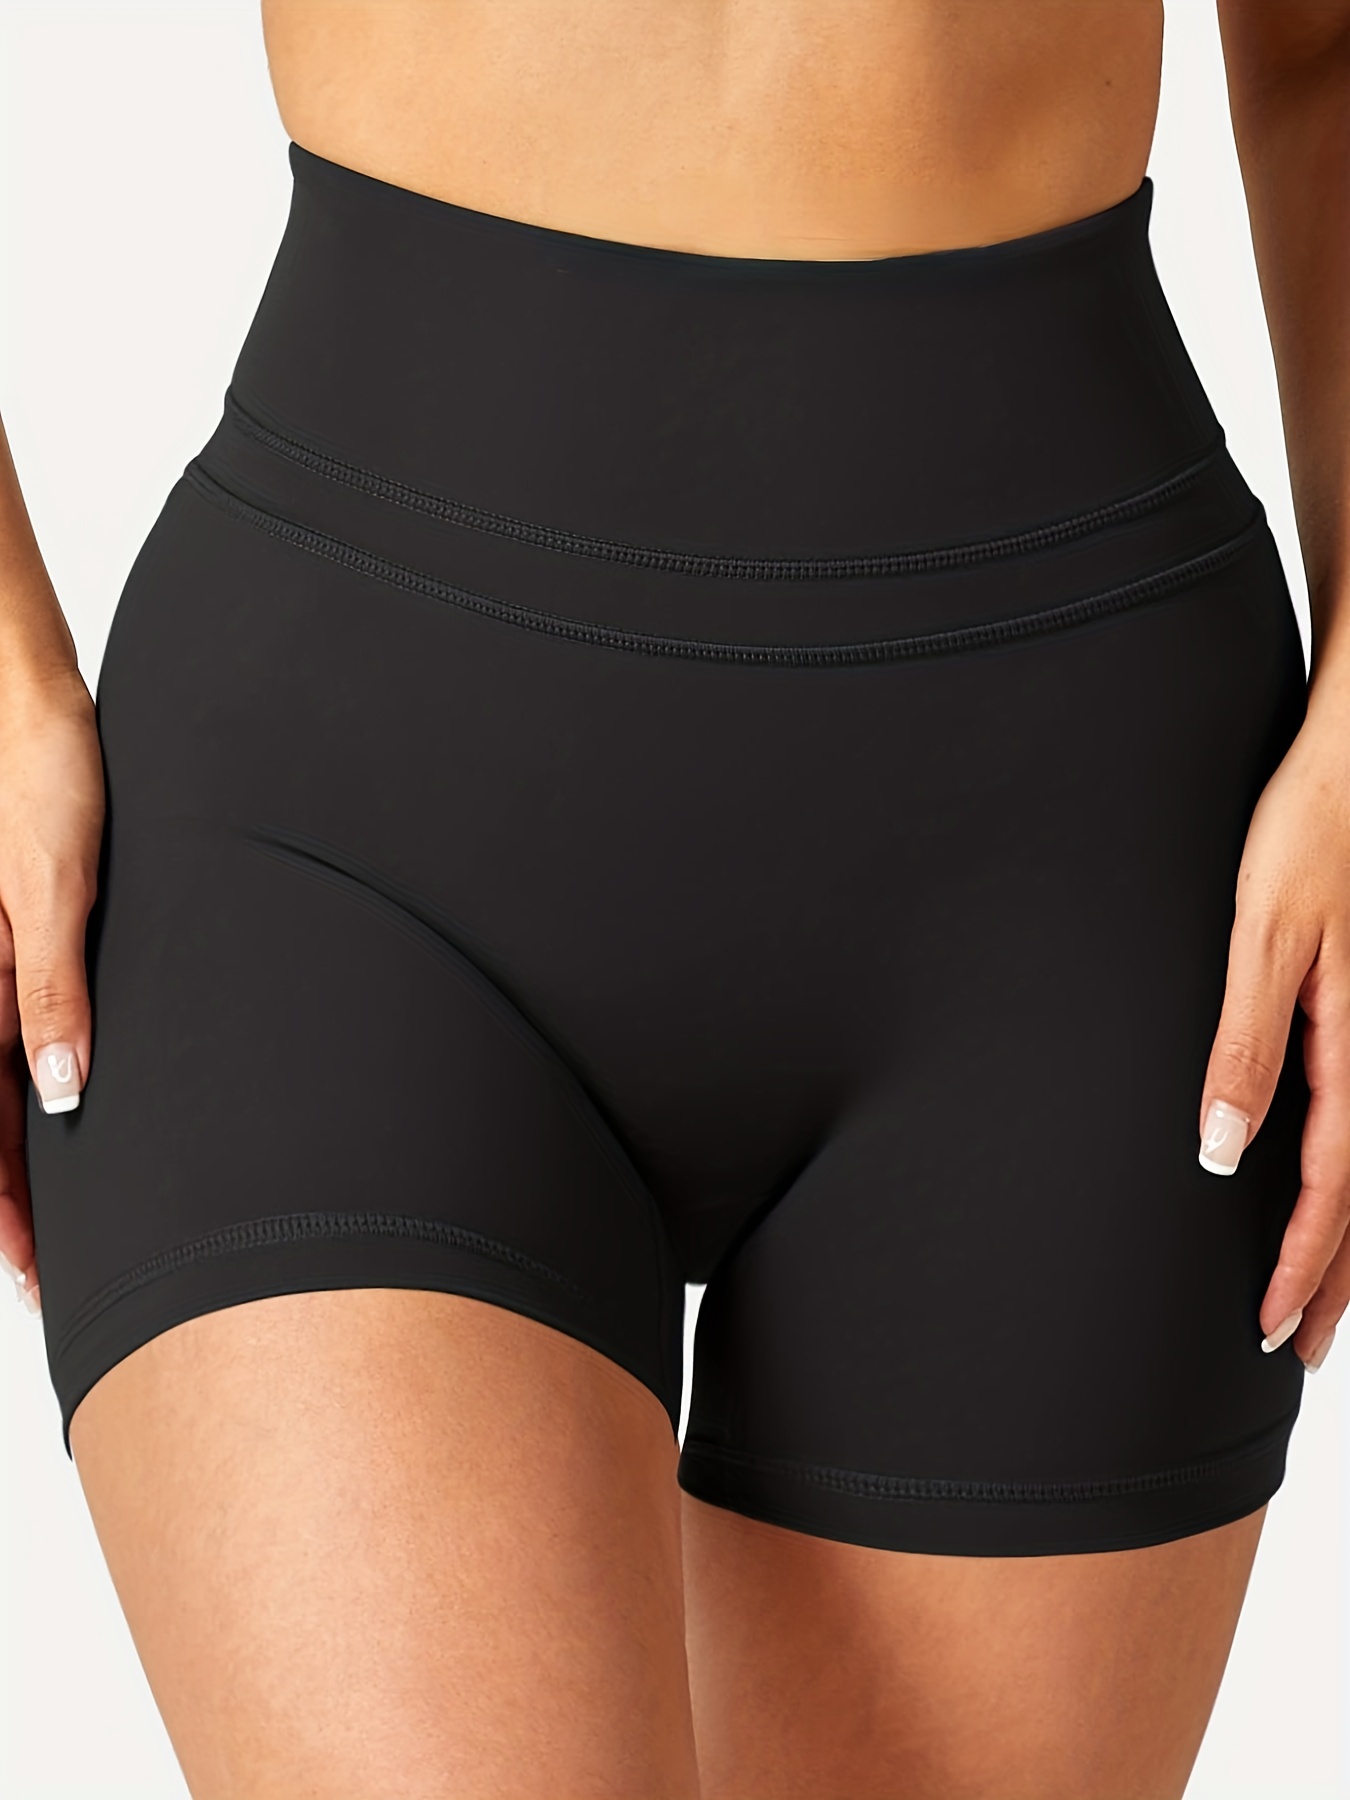 Finelylove Yogalicious Biker Shorts Womens Sports Shorts Gym High Waist  Rise Solid Black L 